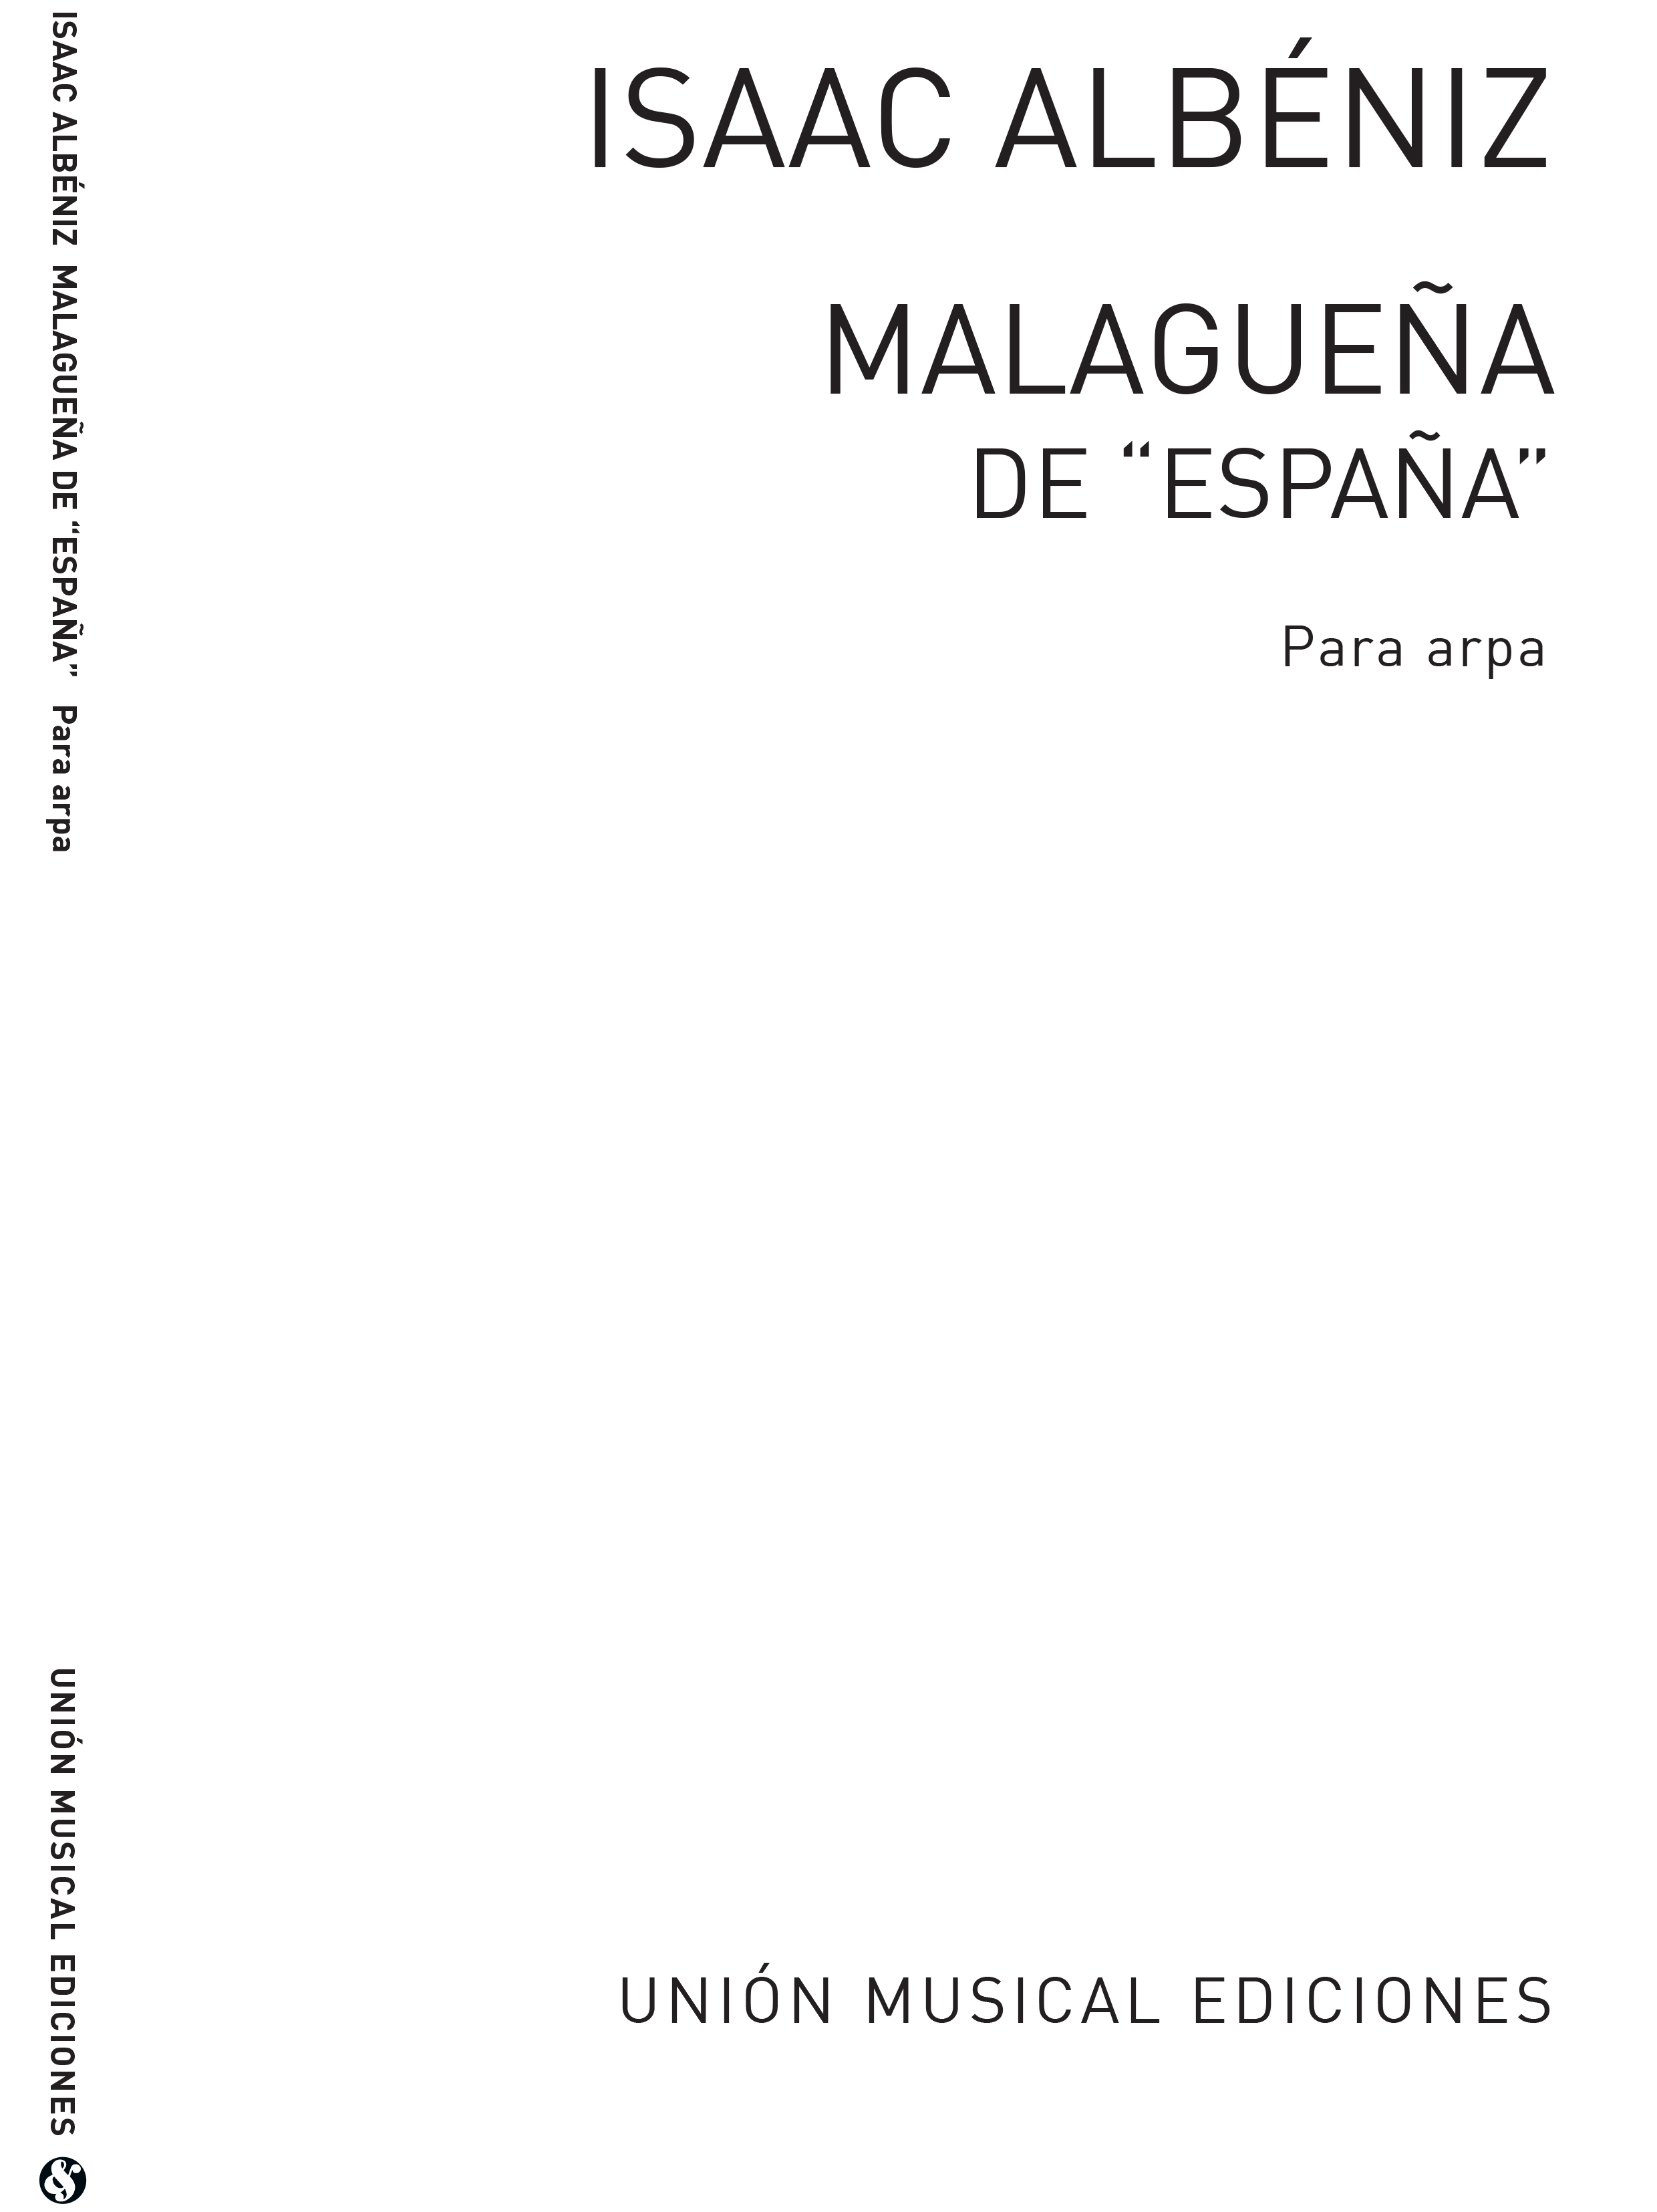 Albeniz: Malaguena (Zabaleta) for Harp